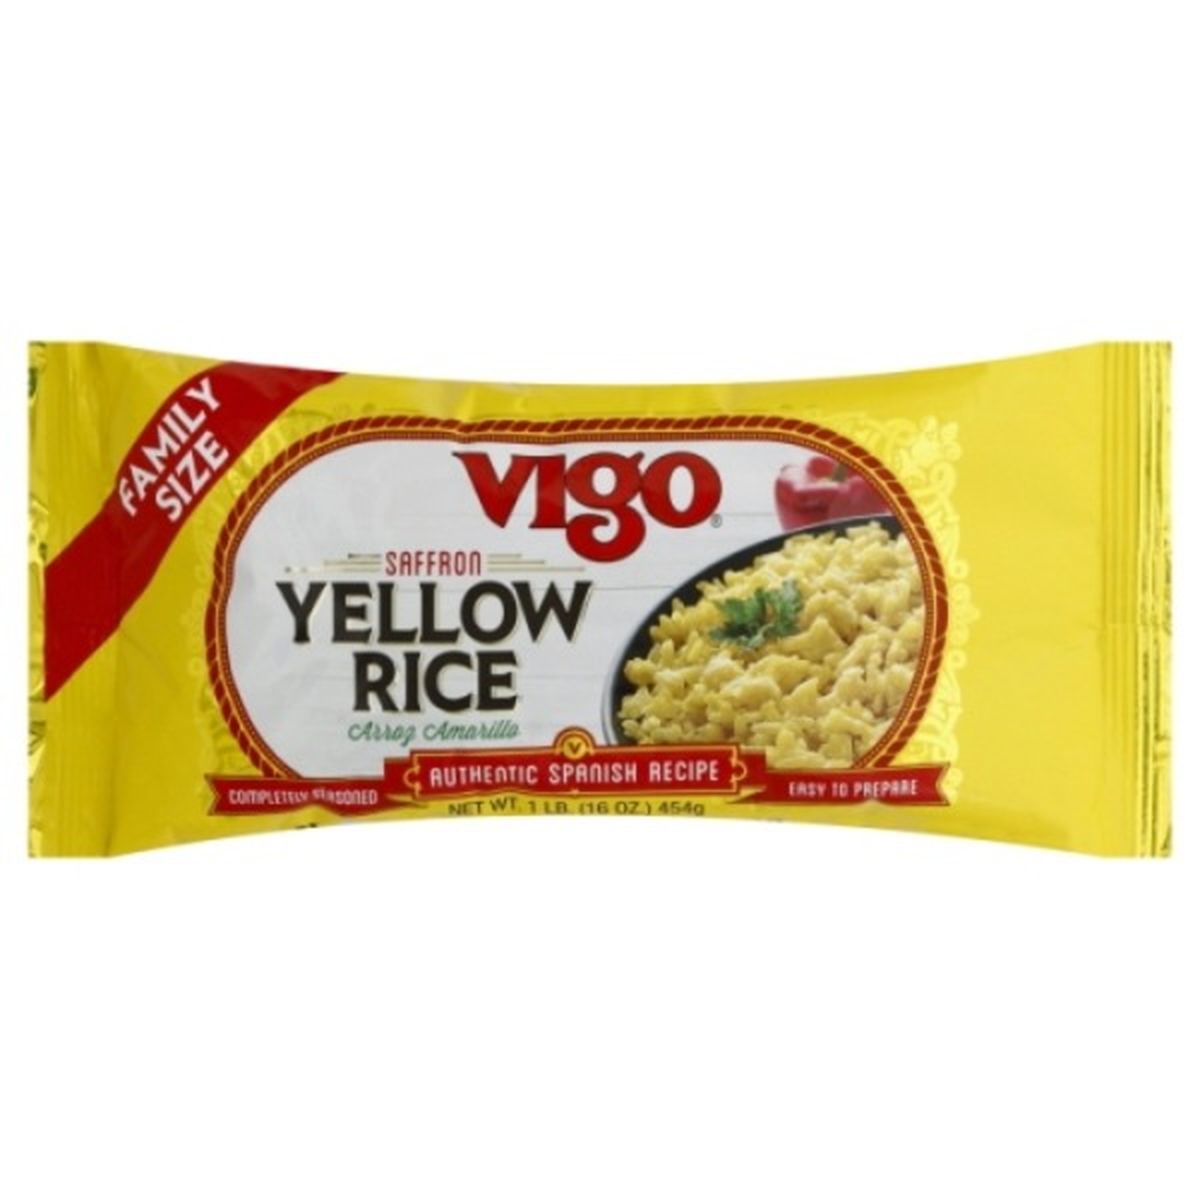 Calories in Vigo Yellow Rice, Saffron, Family Size